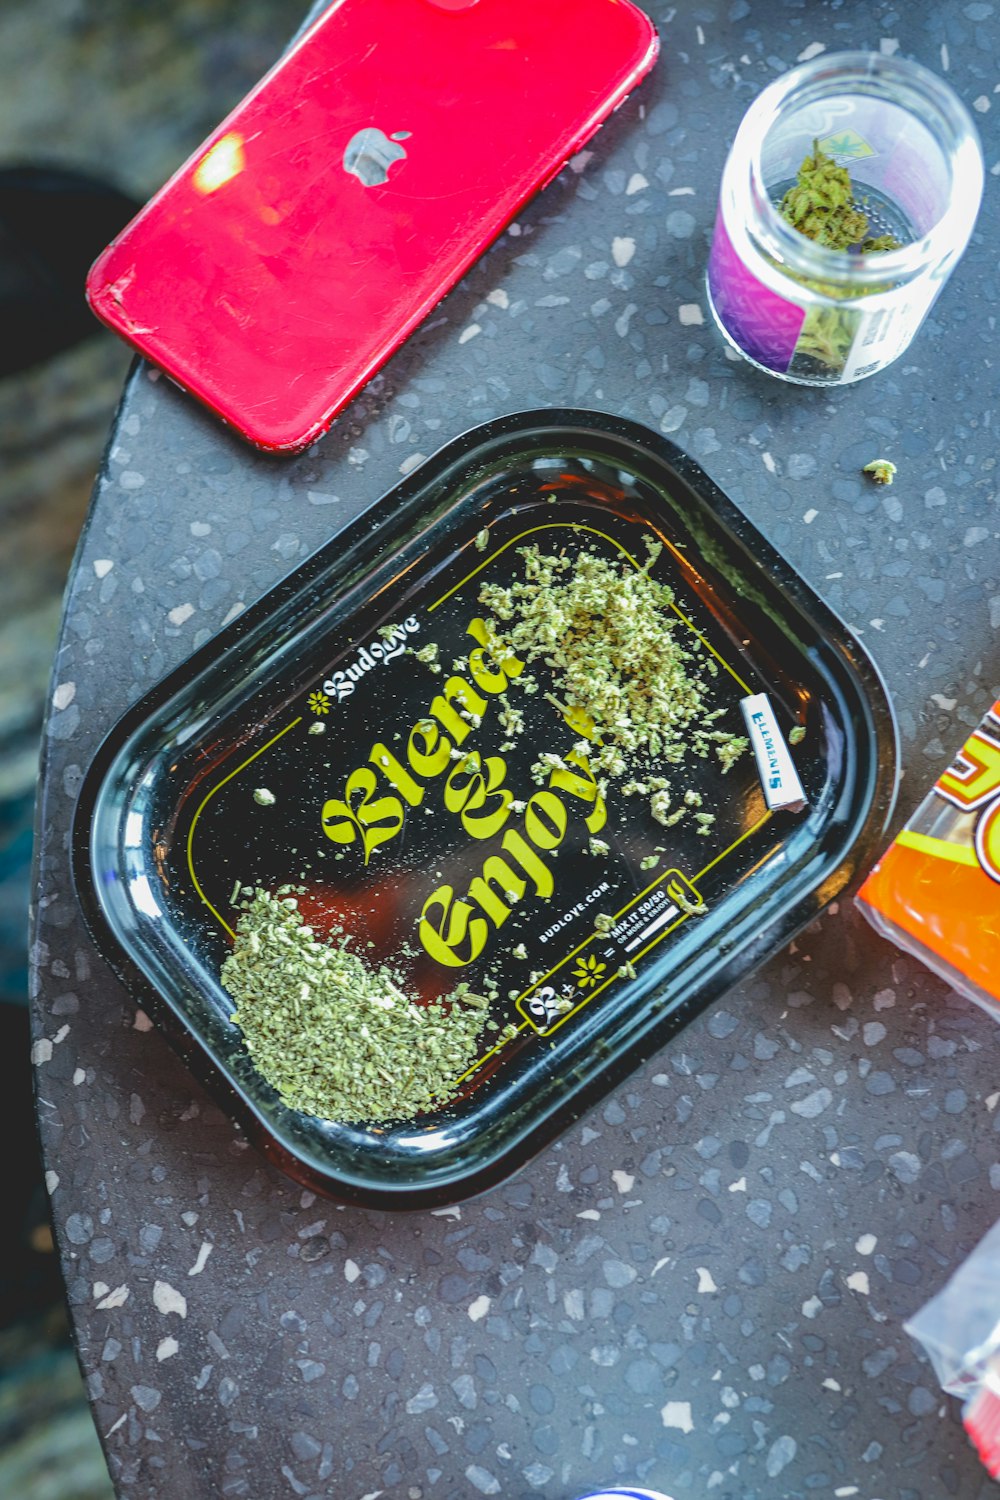 a tray of marijuana sits on a table